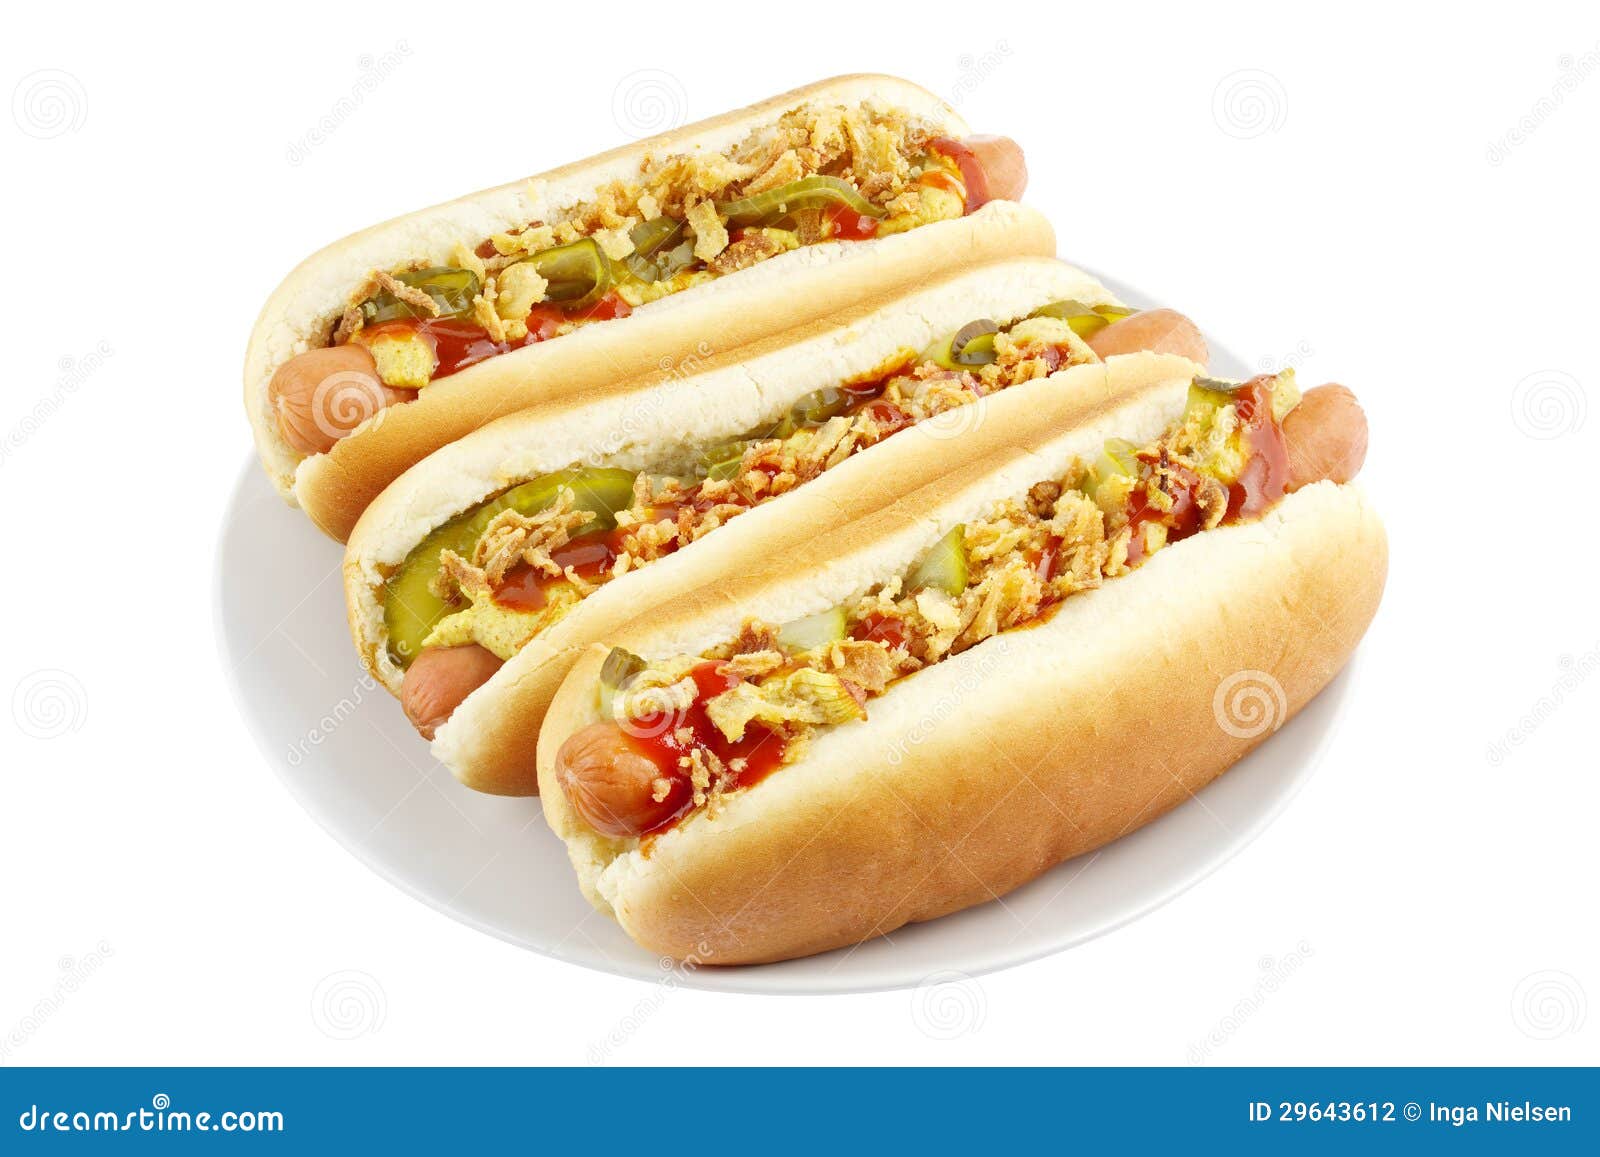 hot-dogs-plate-29643612.jpg